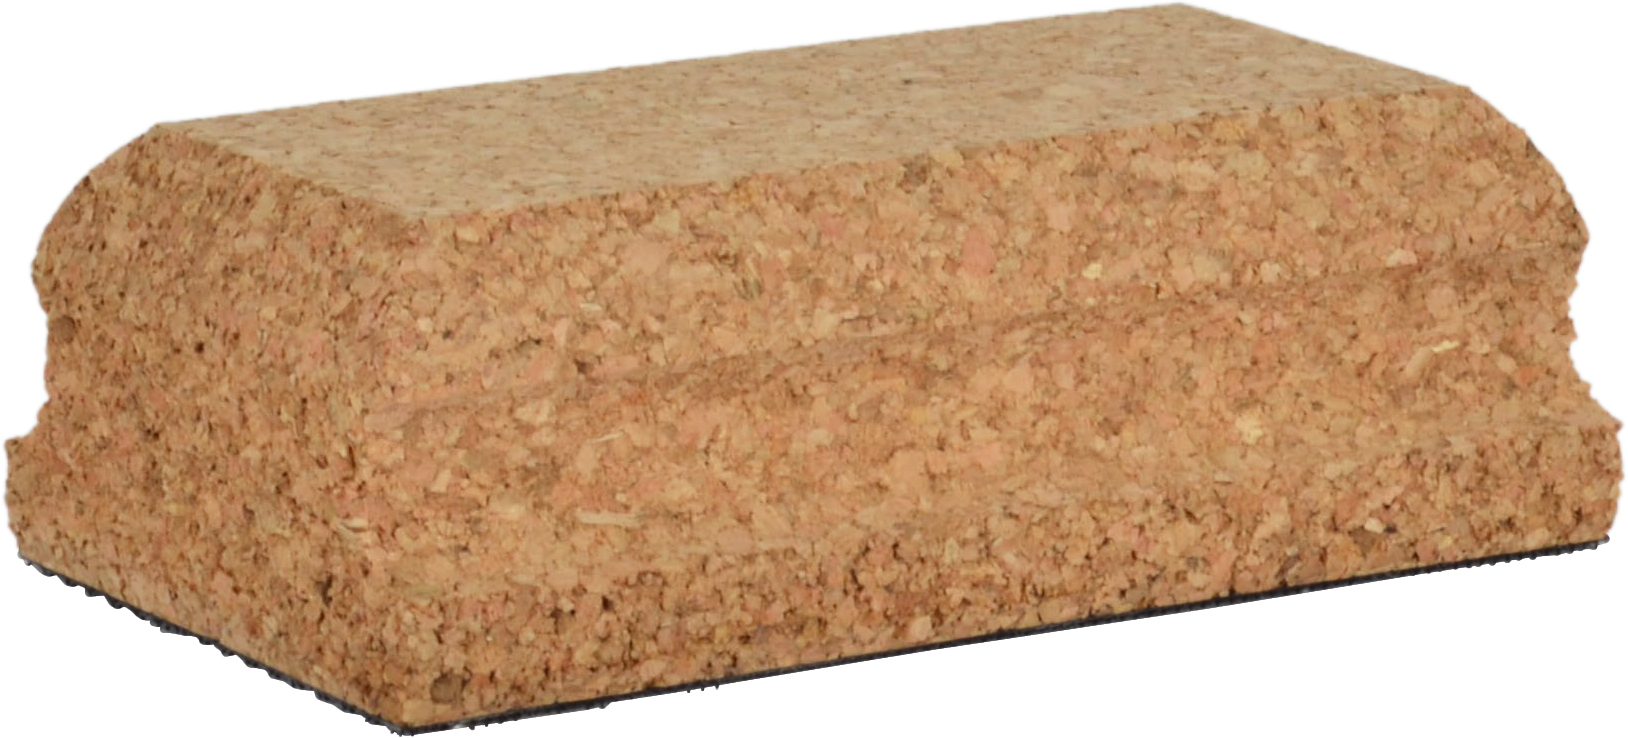 Cork Sanding Block - SIA Abrasives - Ardec - Finishing Products